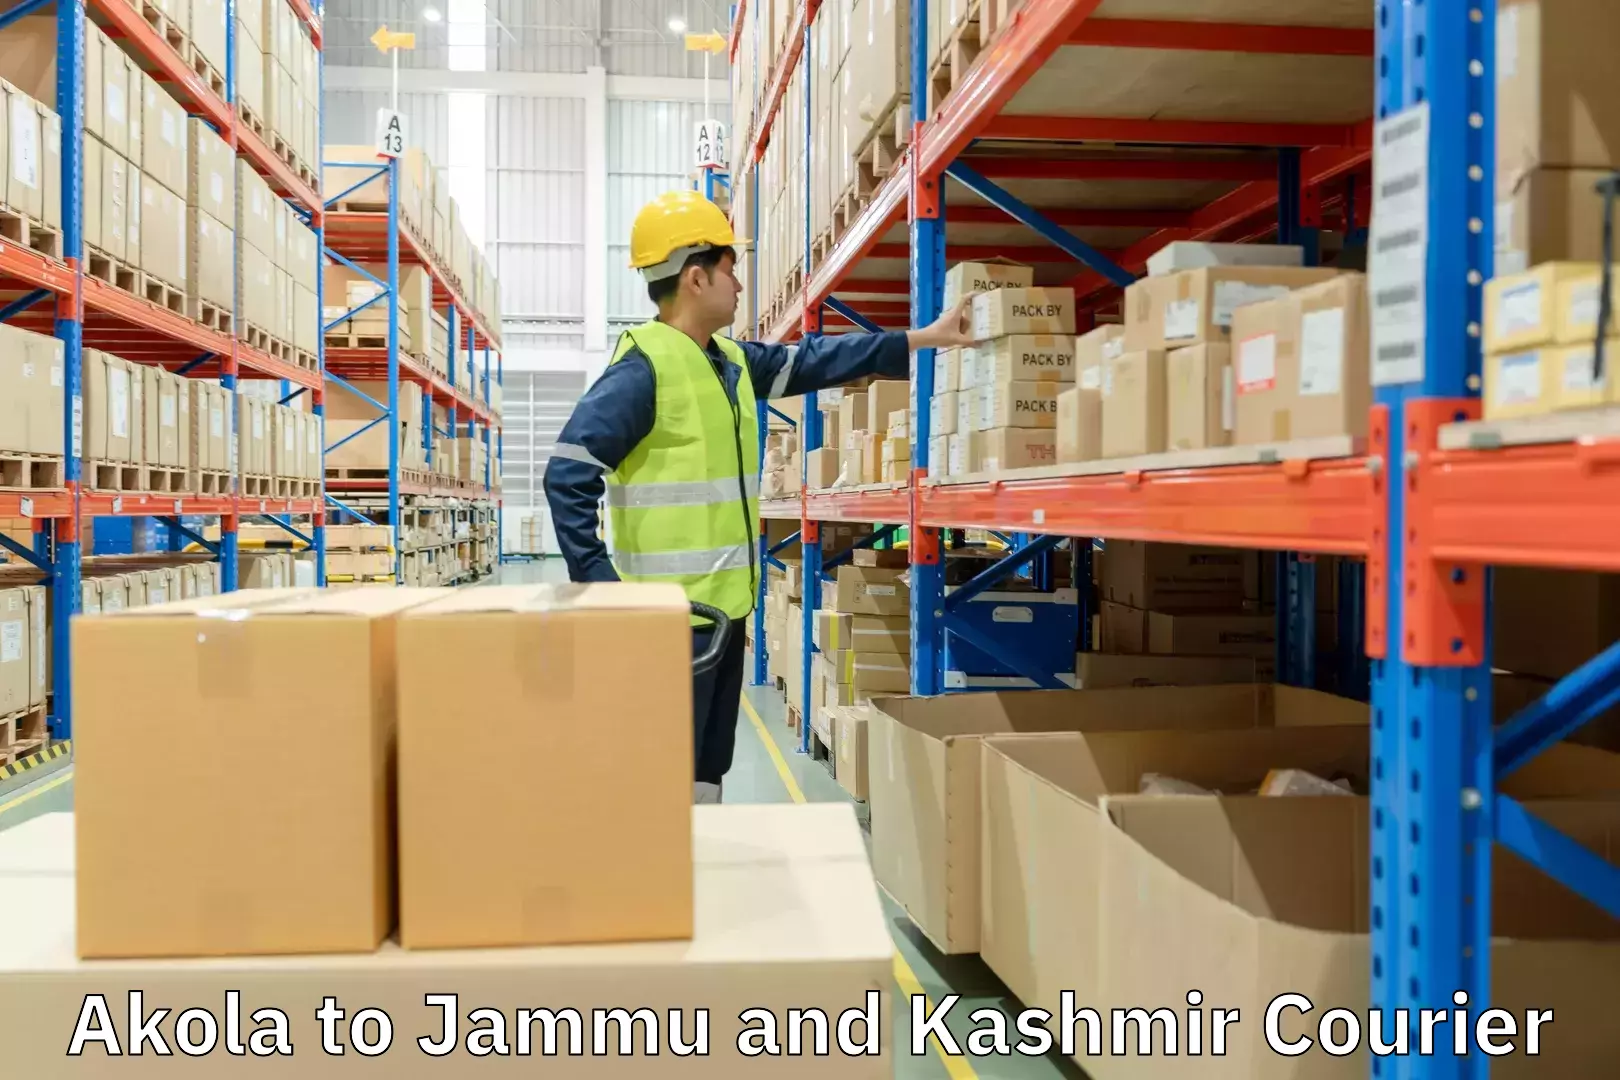 Professional courier handling Akola to Jammu and Kashmir